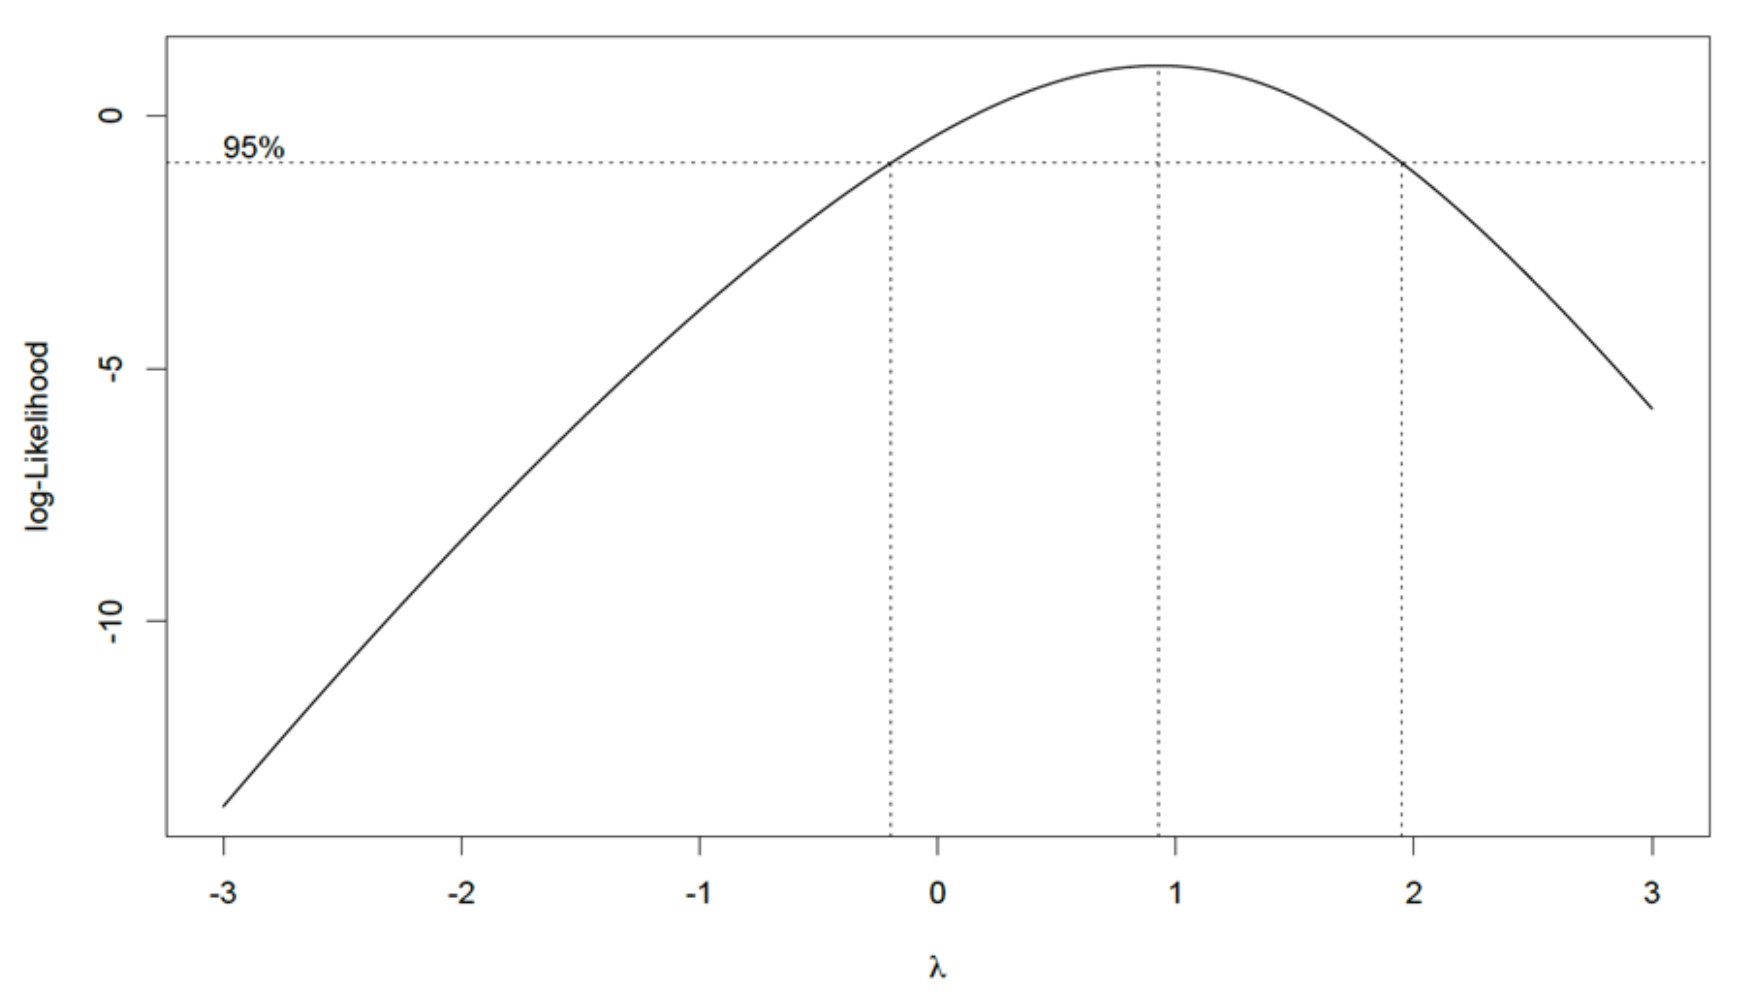 R-generated plot of log-likelihood vs lambda.